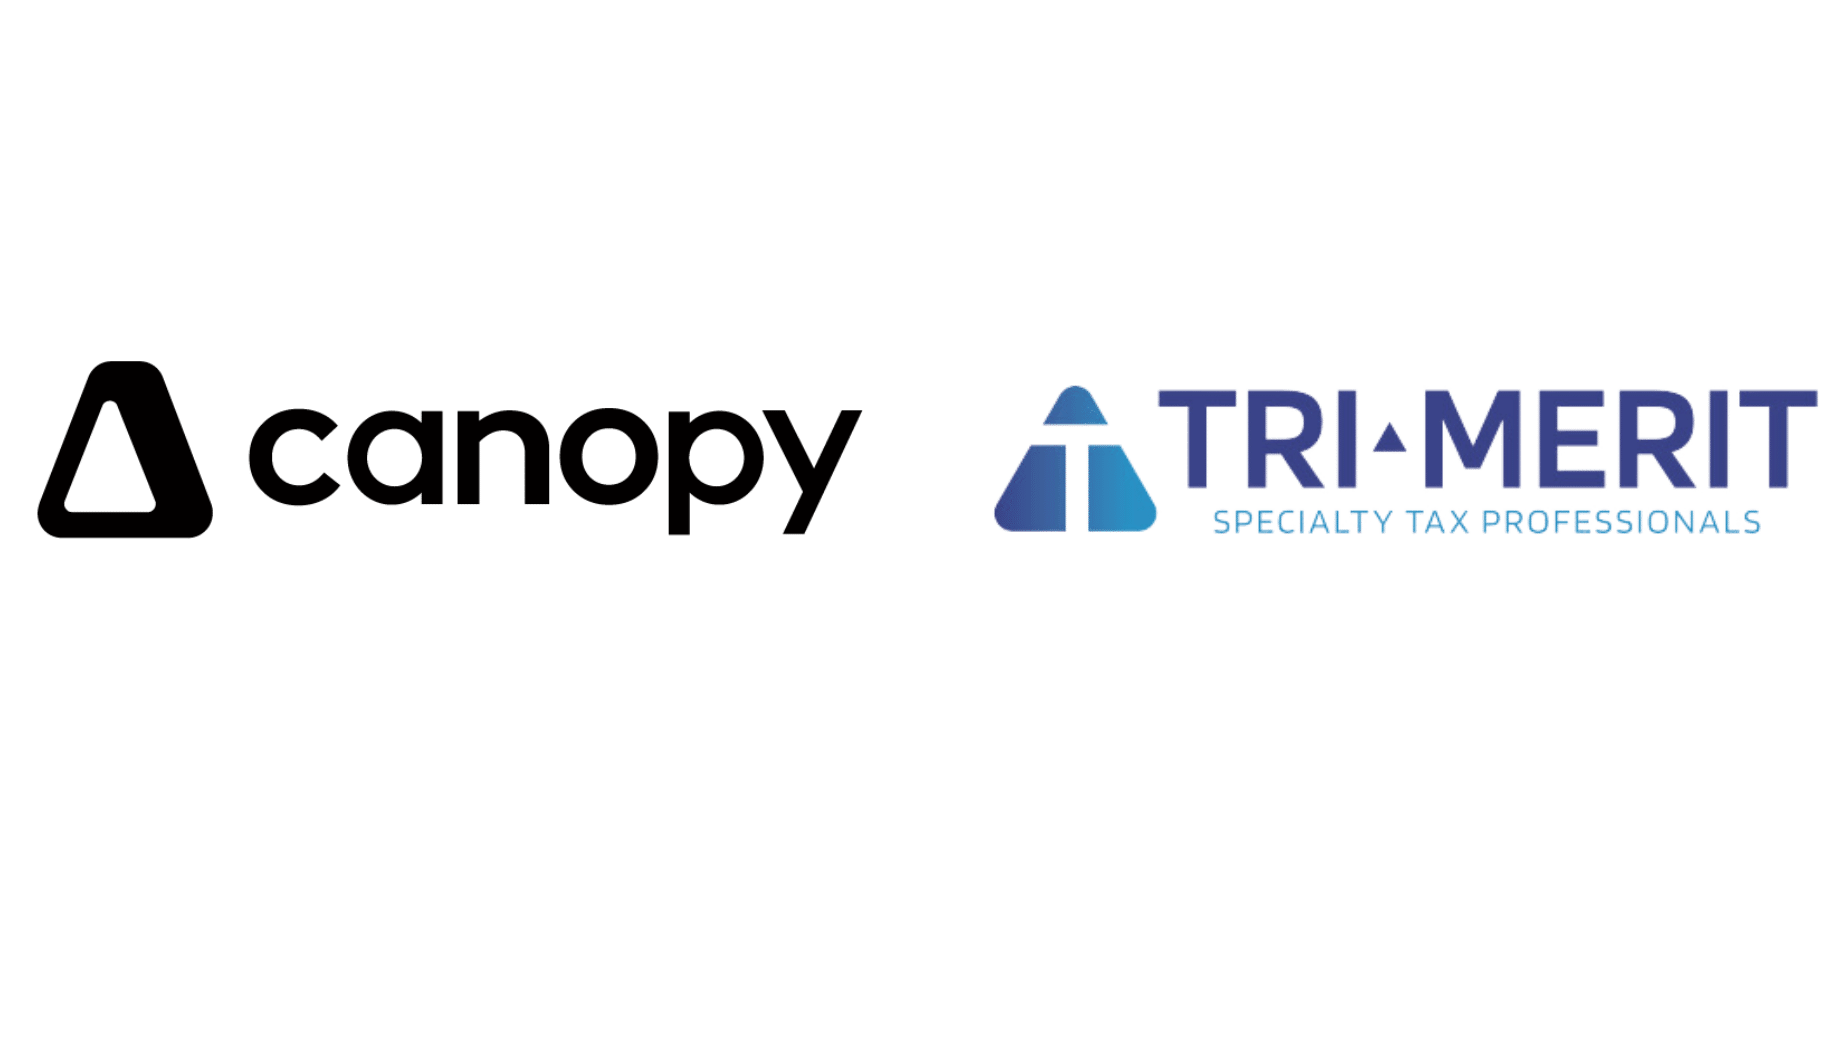 Canopy Trimerit - Employee Retention Credit - Canopy Partnership - Tri-Merit